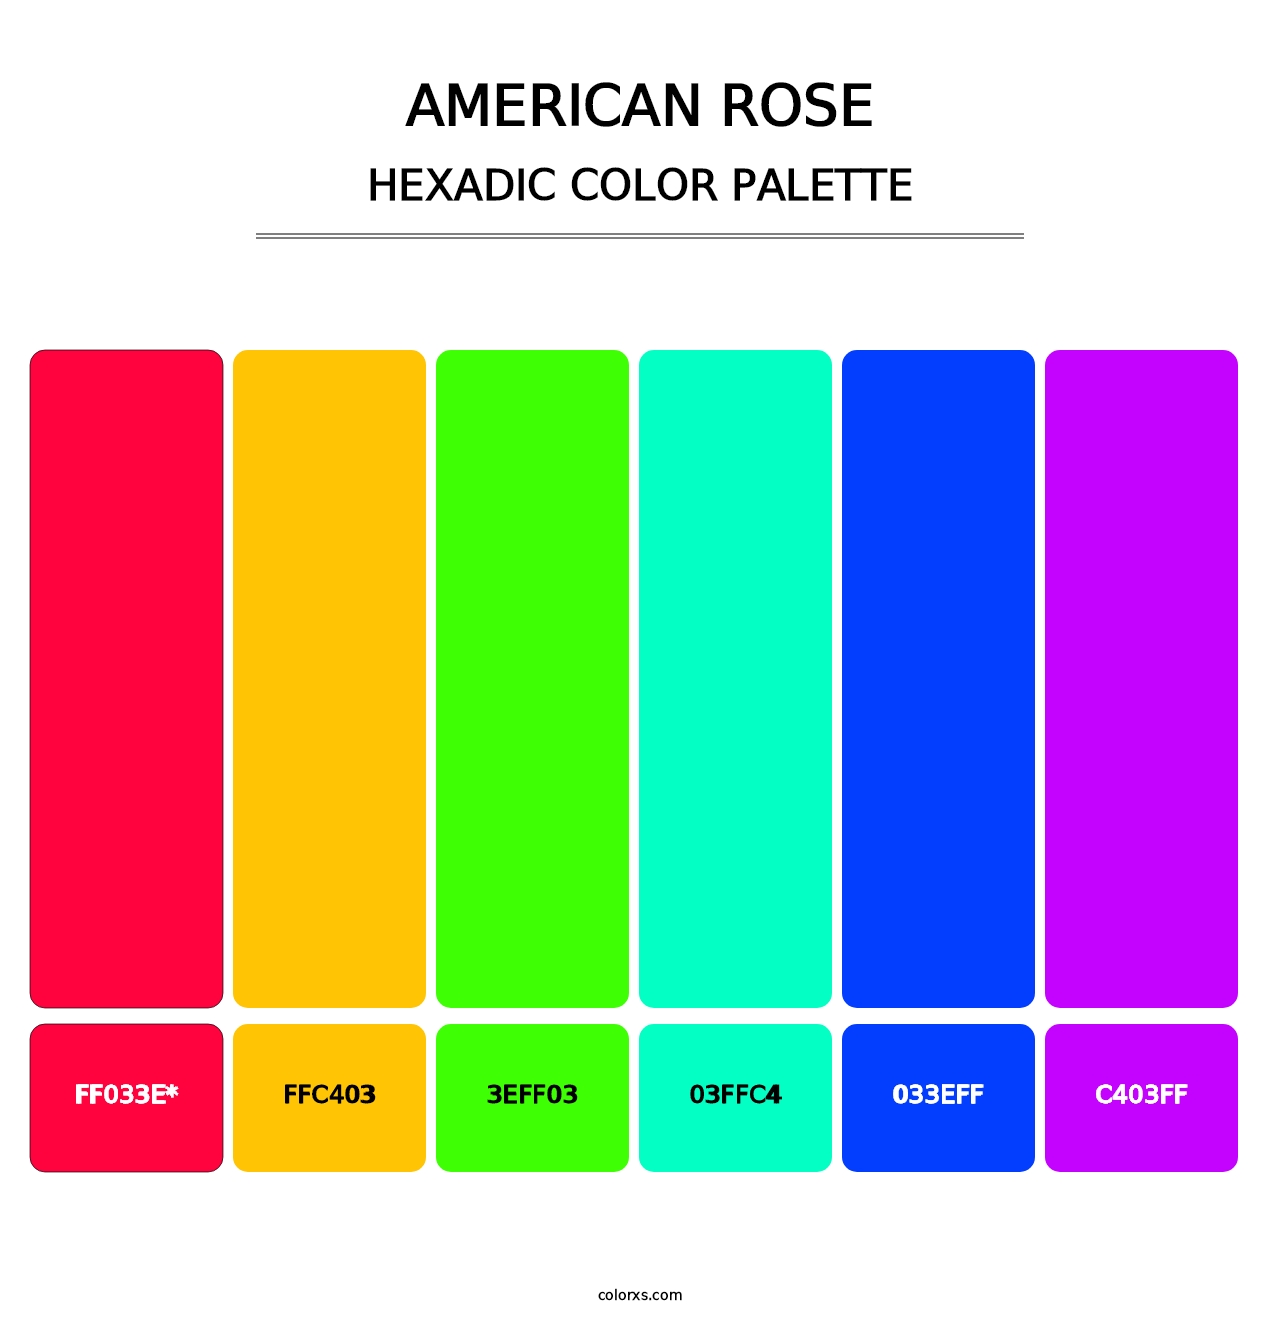 American Rose - Hexadic Color Palette